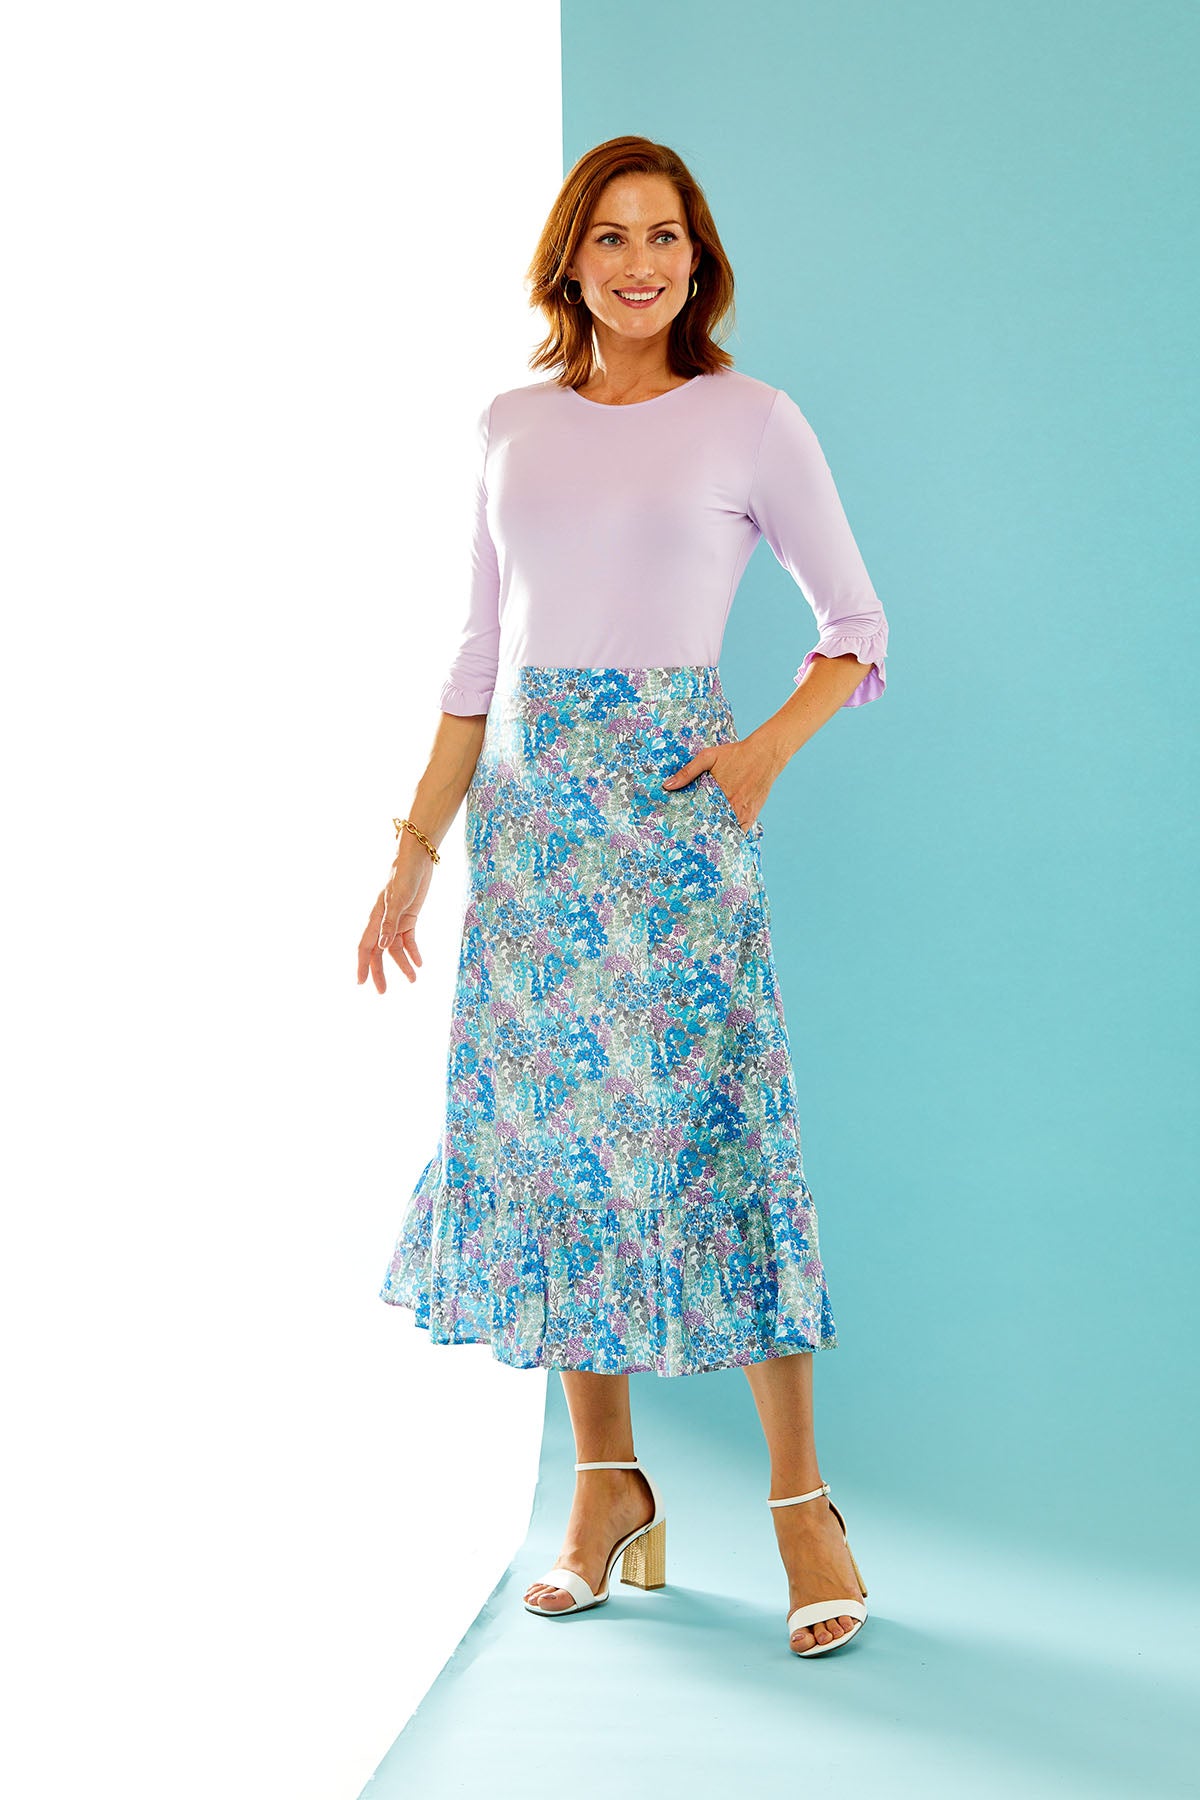 Woman in floral printed skirt